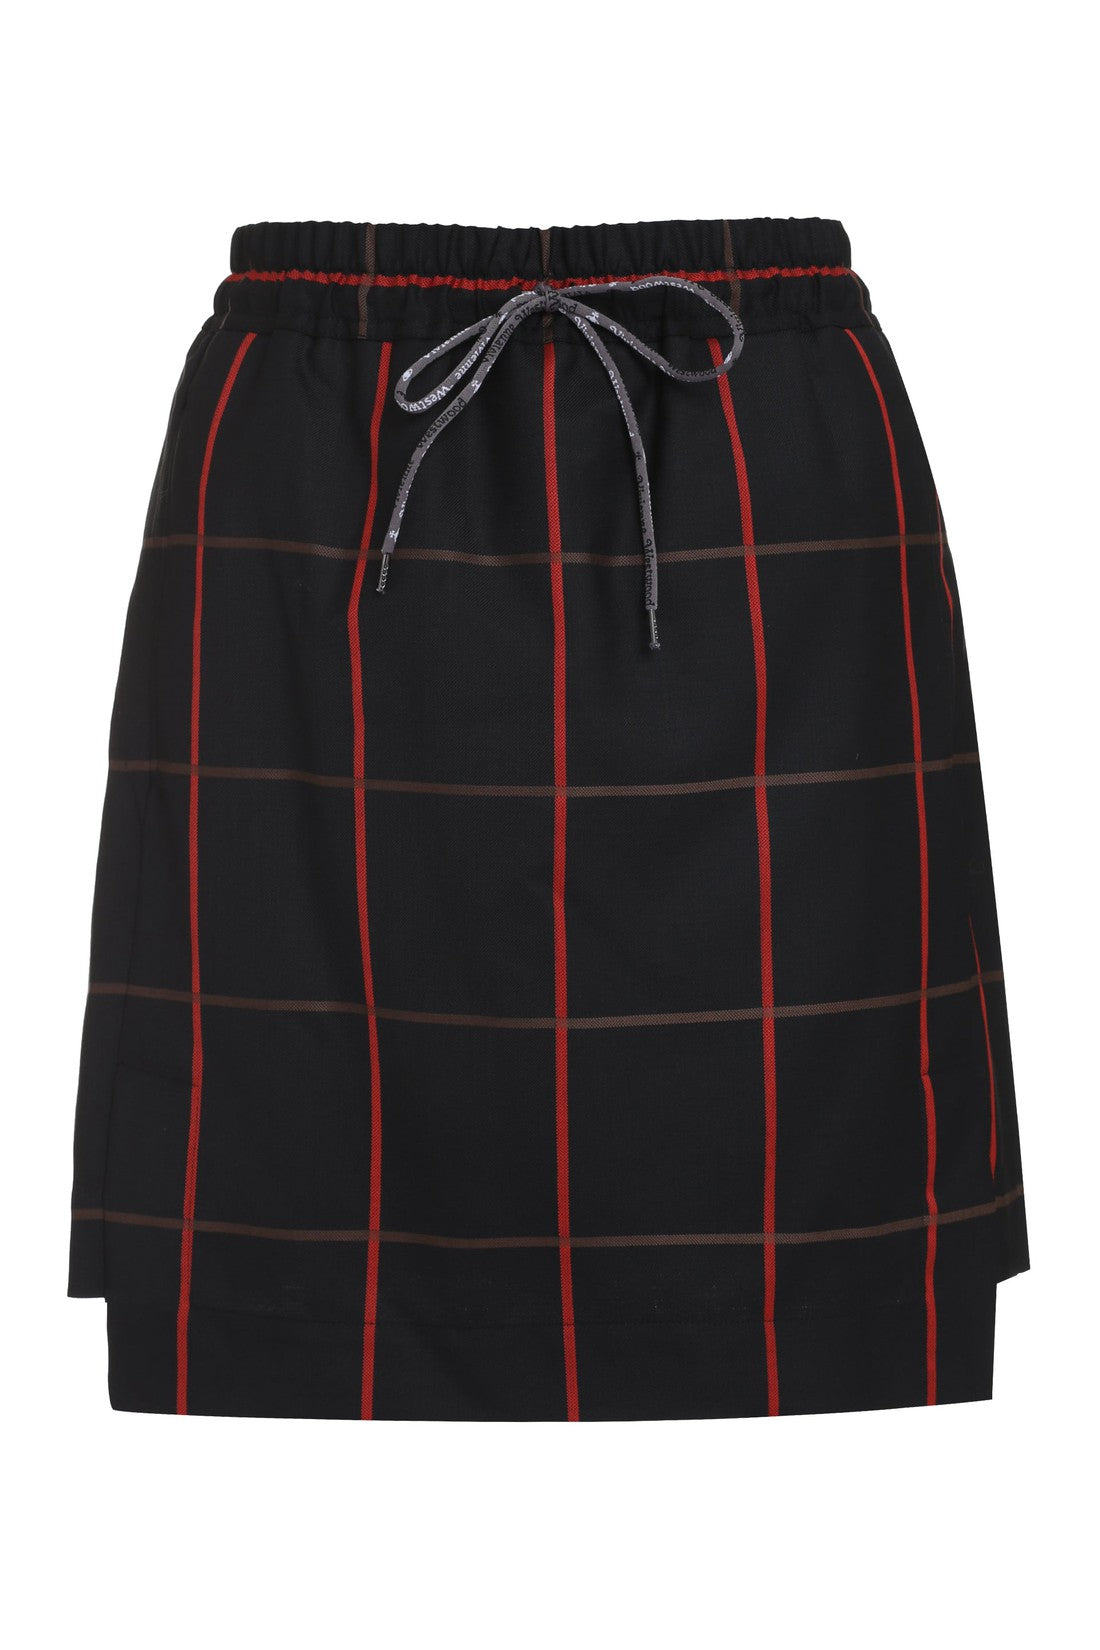 Vivienne Westwood-OUTLET-SALE-Check pattern wool skirt-ARCHIVIST